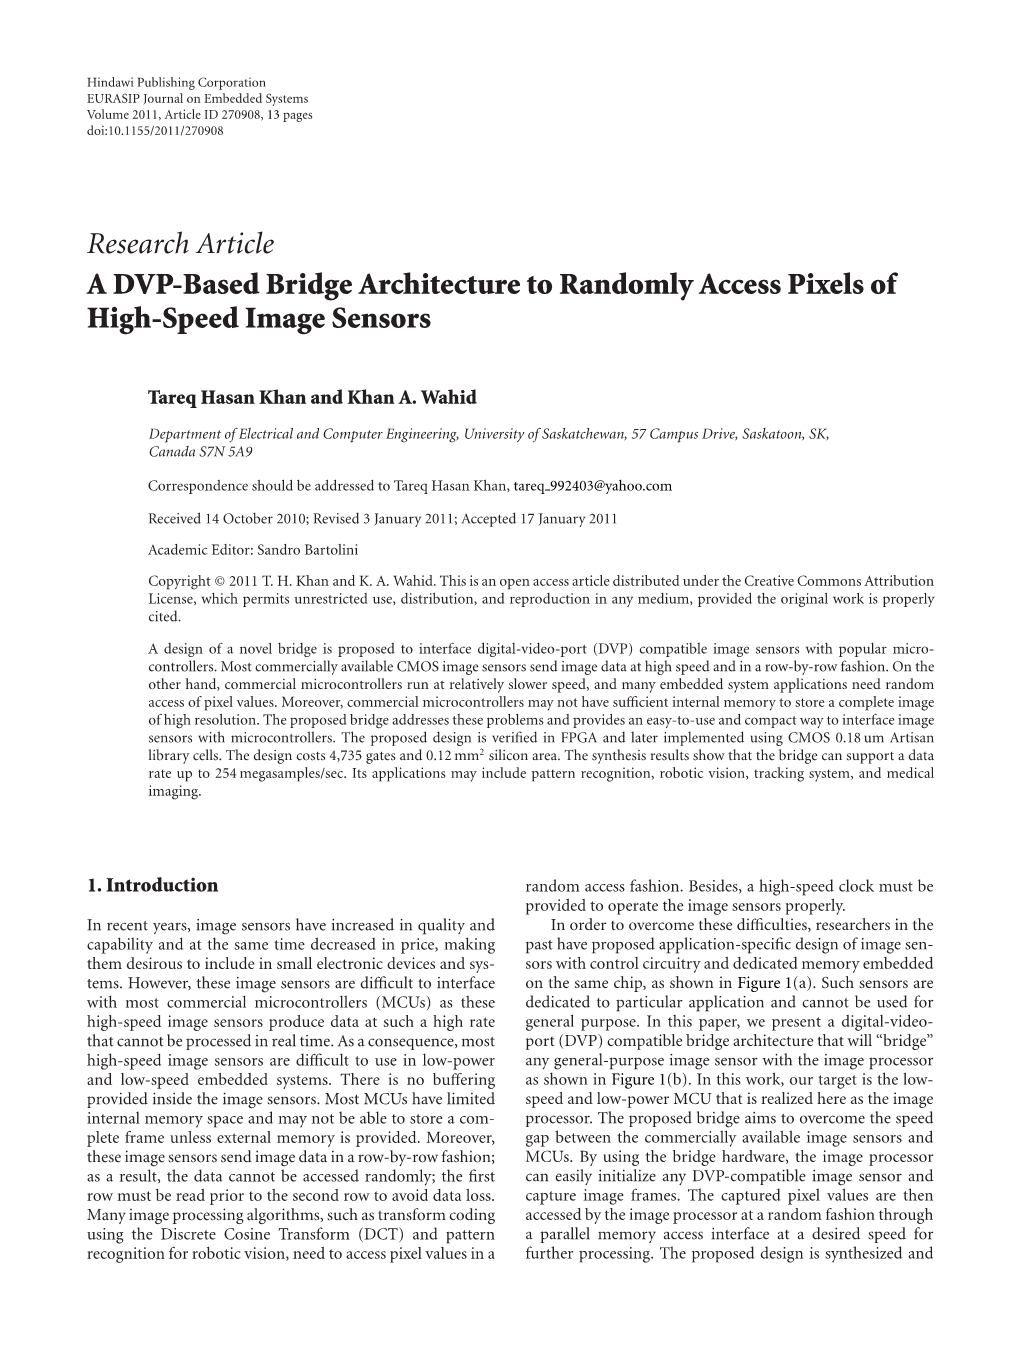 A DVP-Based Bridge Architecture to Randomly Access Pixels of High-Speed Image Sensors